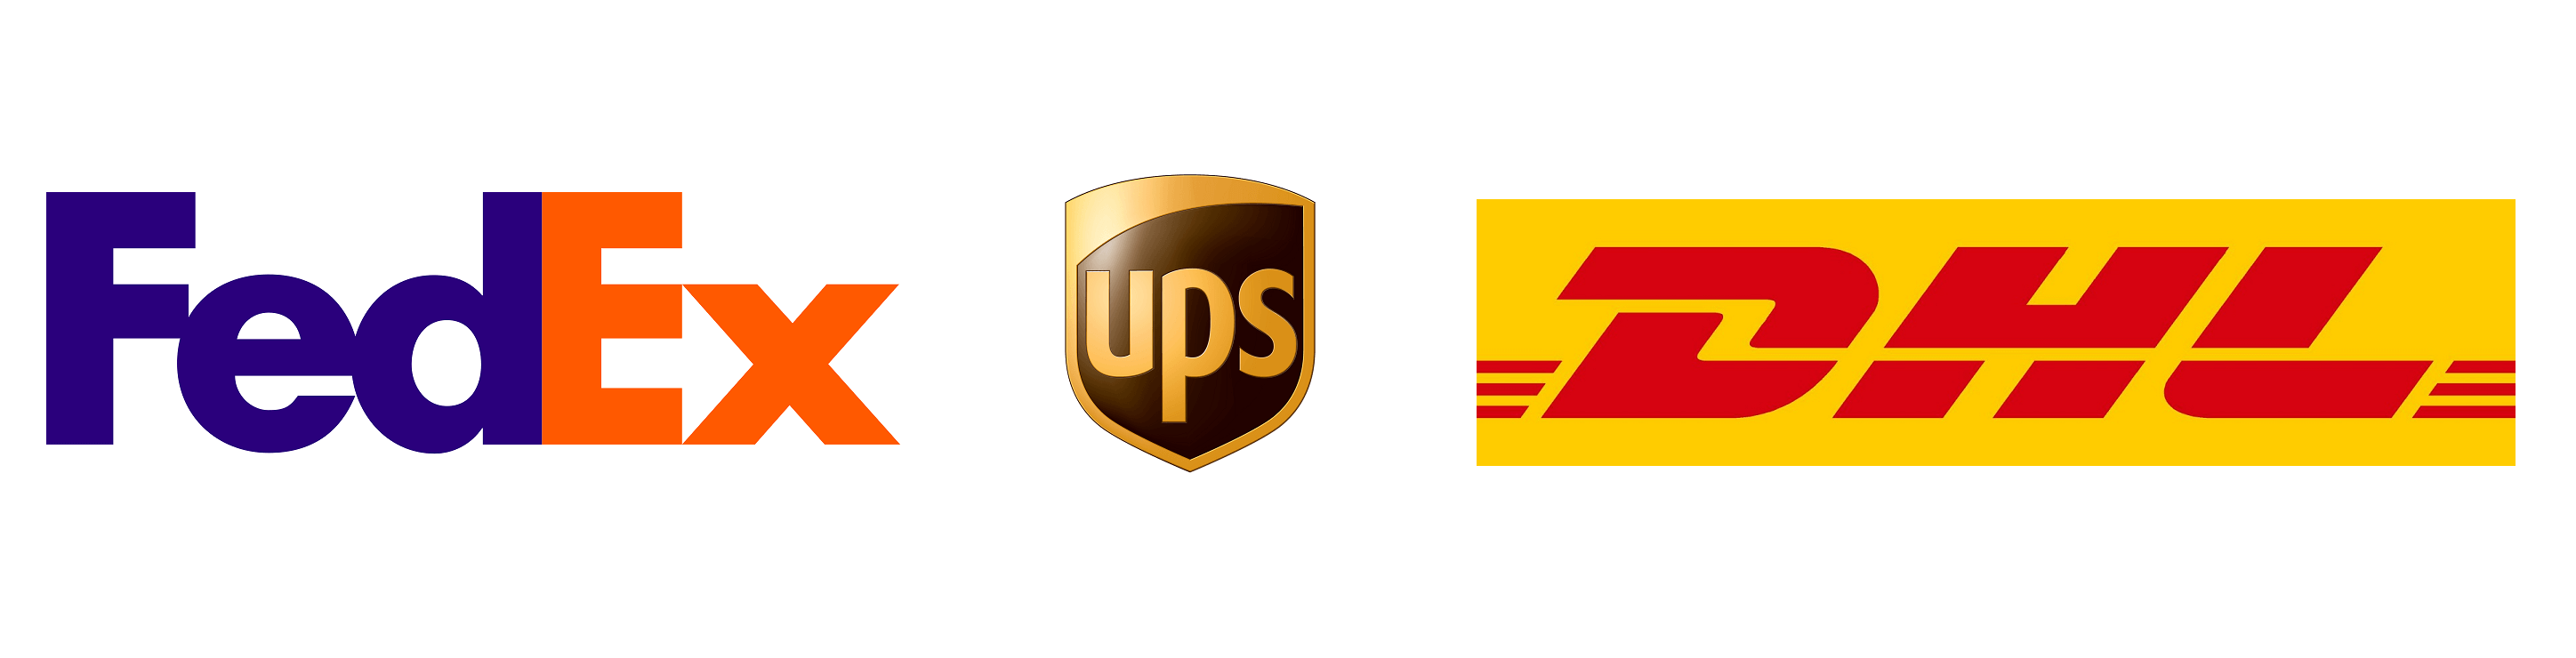 Ups Fedex Logo - Marketing and PR Strategies of Fedex, UPS and DHL